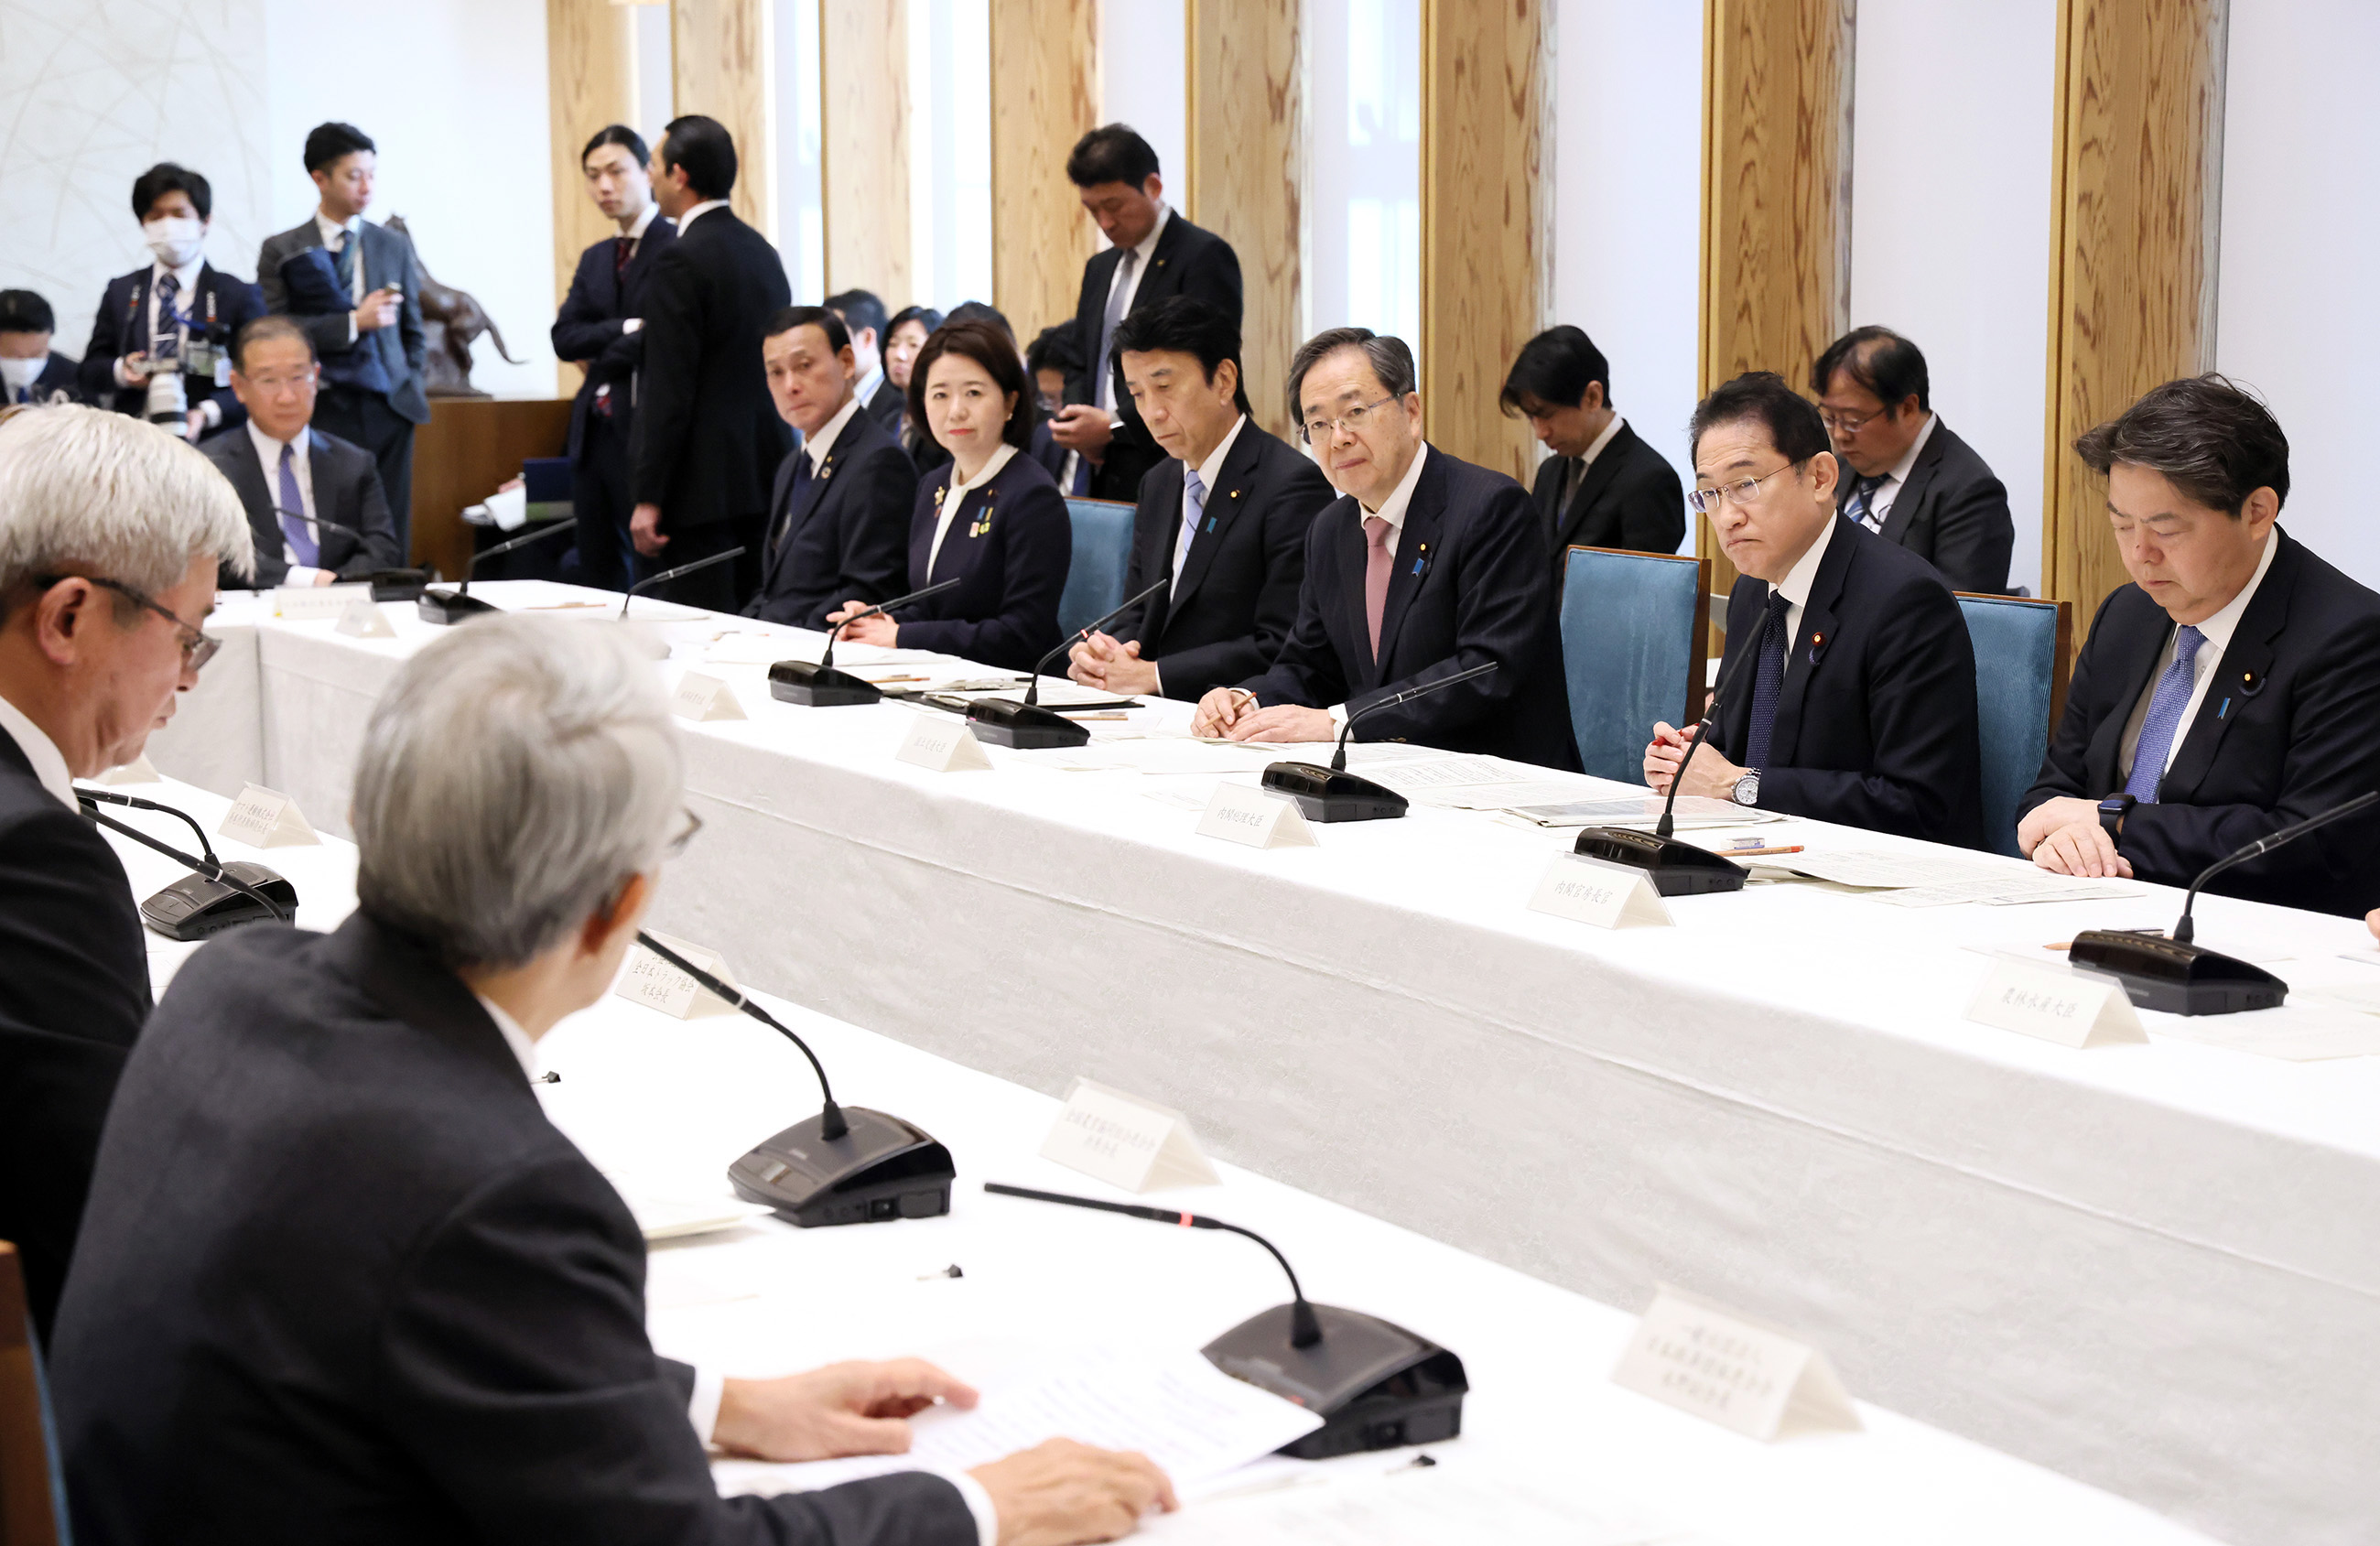 Prime Minister Kishida listening to participants 